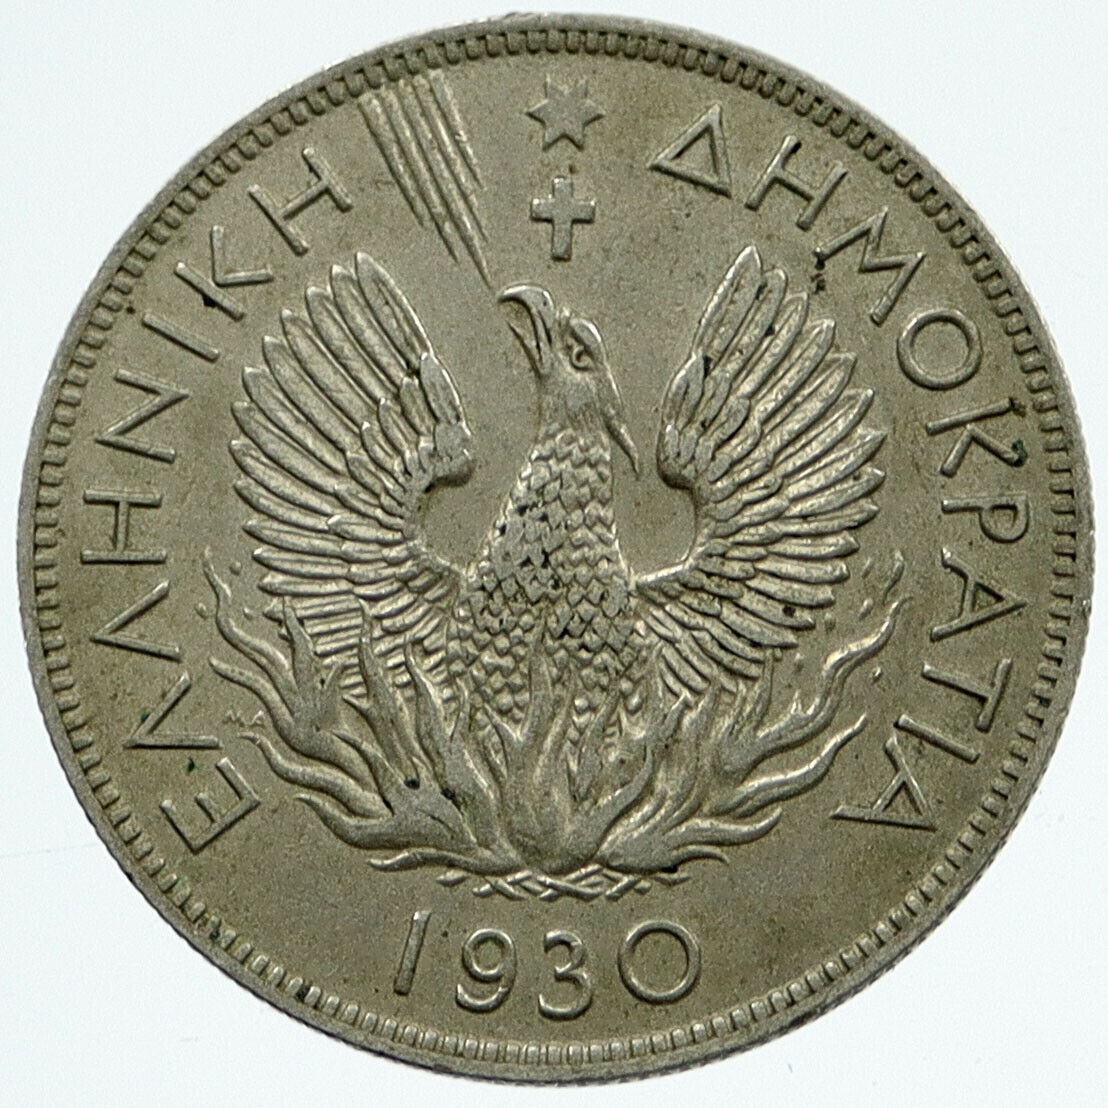 1930 GREECE Second Republic PHOENIX on FIRE Antique 5 Drachmai Coin i117178